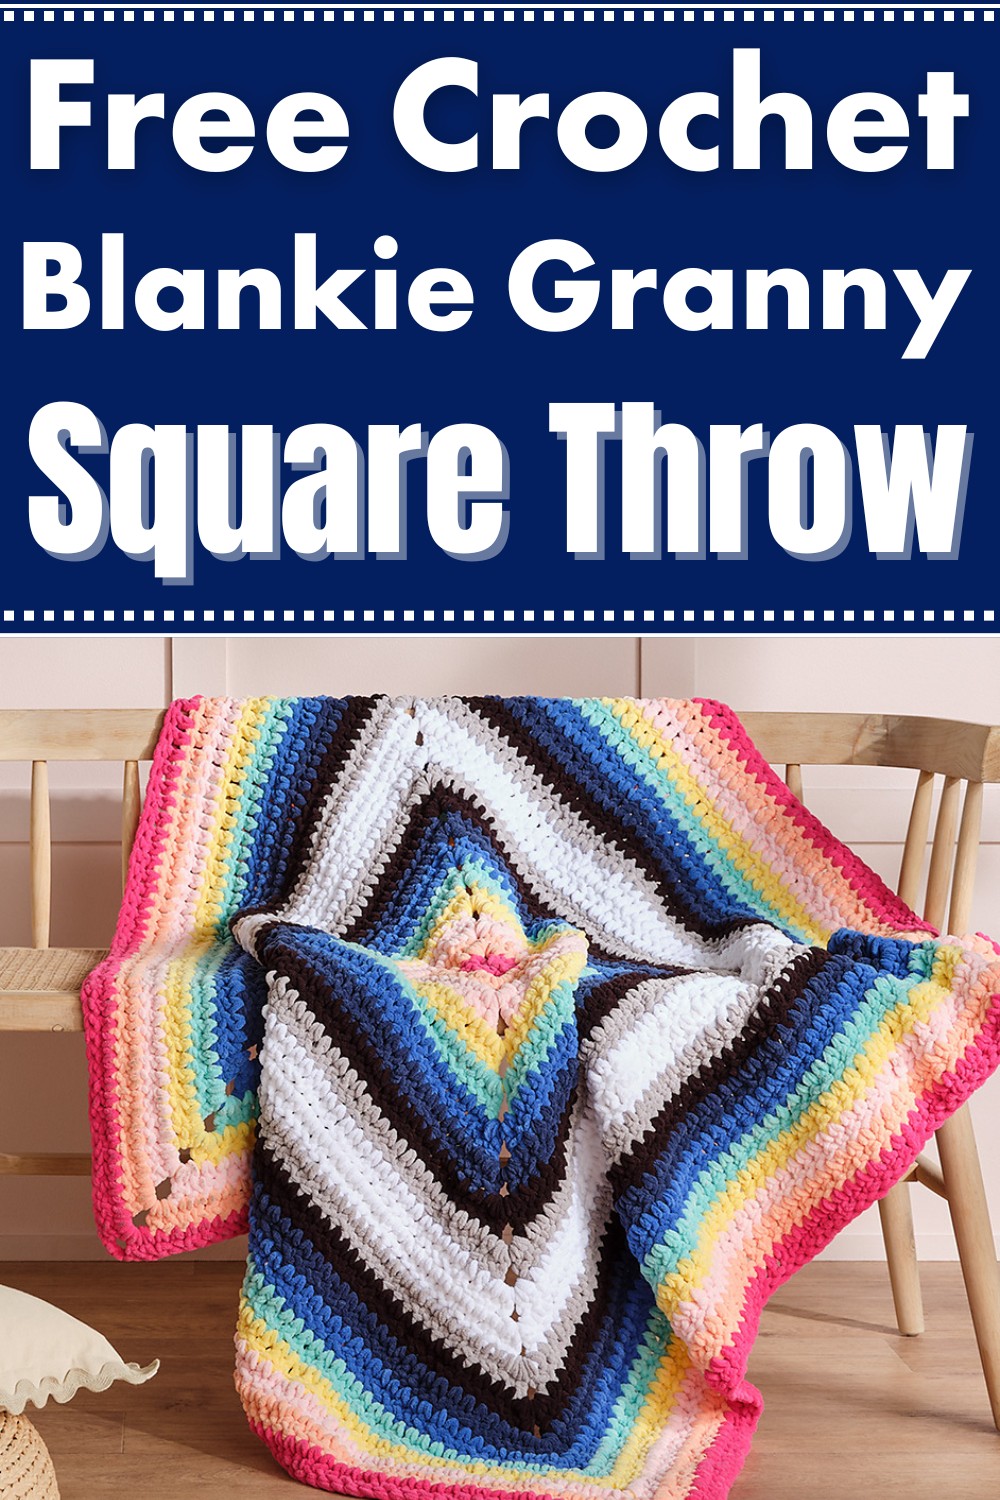 Blankie Granny Square Throw